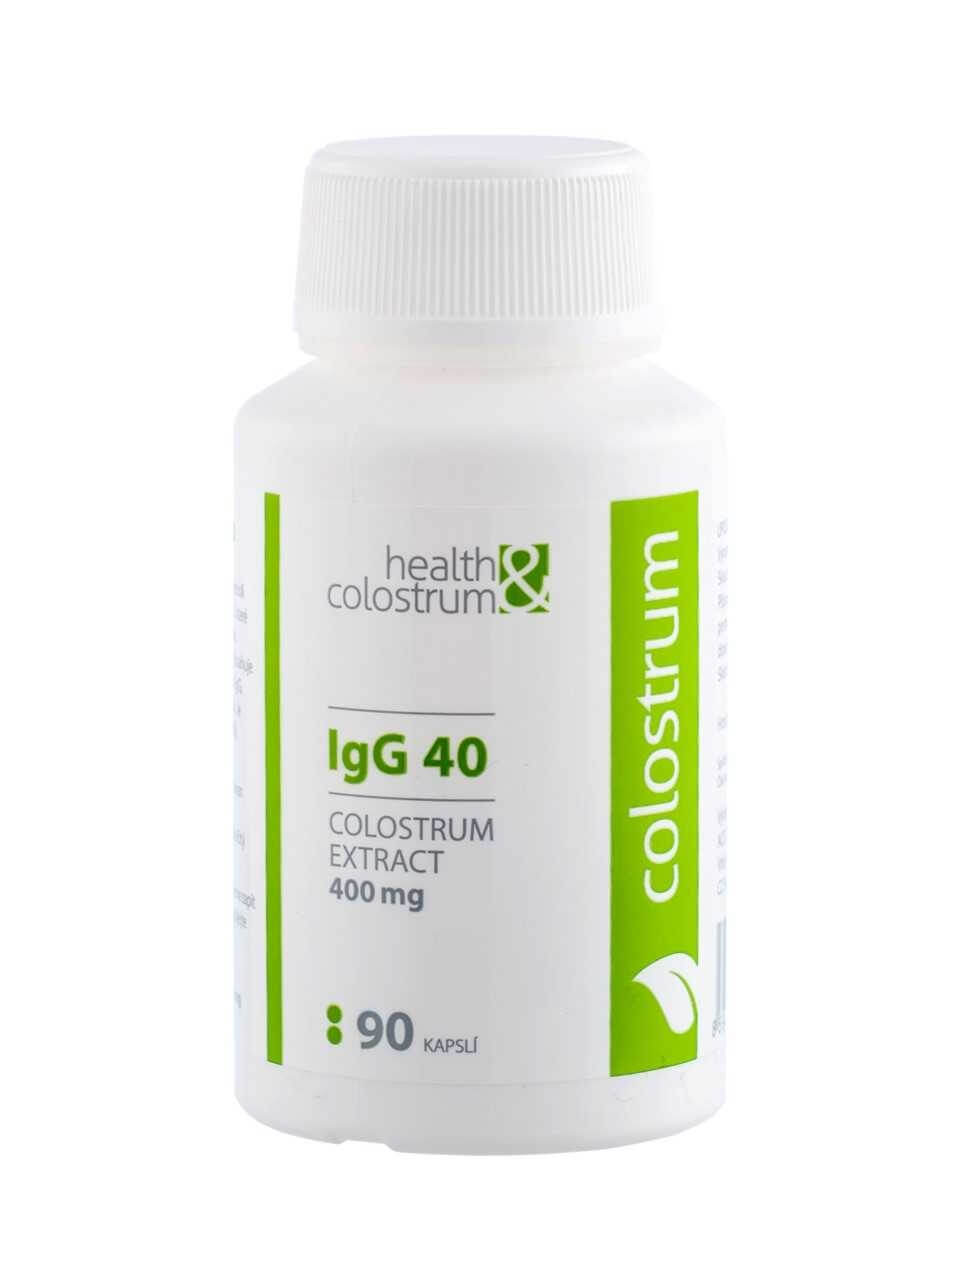 Health&colostrum Colostrum IgG 40 (400 mg) 90 kapslí